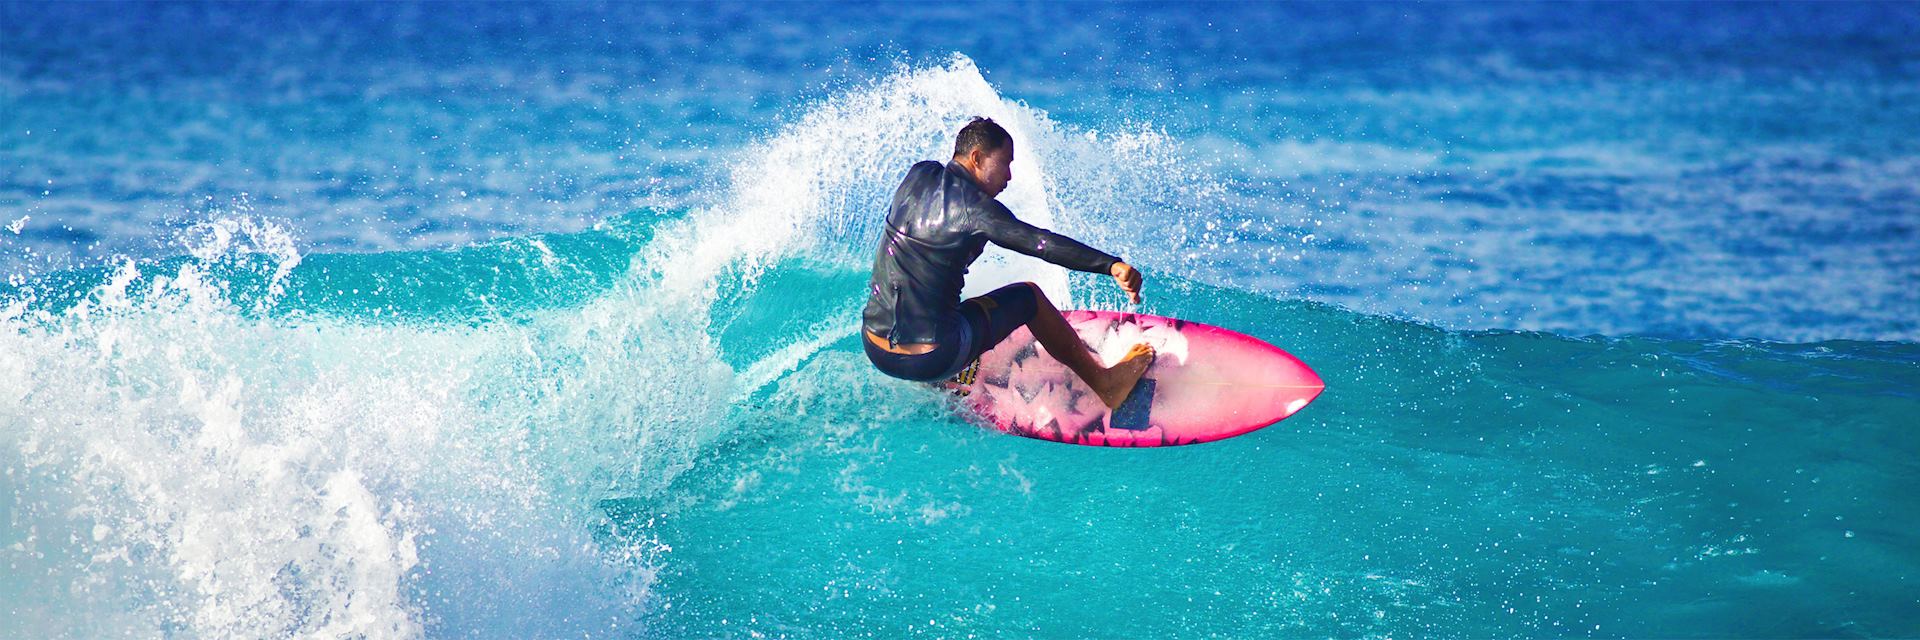 Surfer off the coast of Kauai, Hawaii